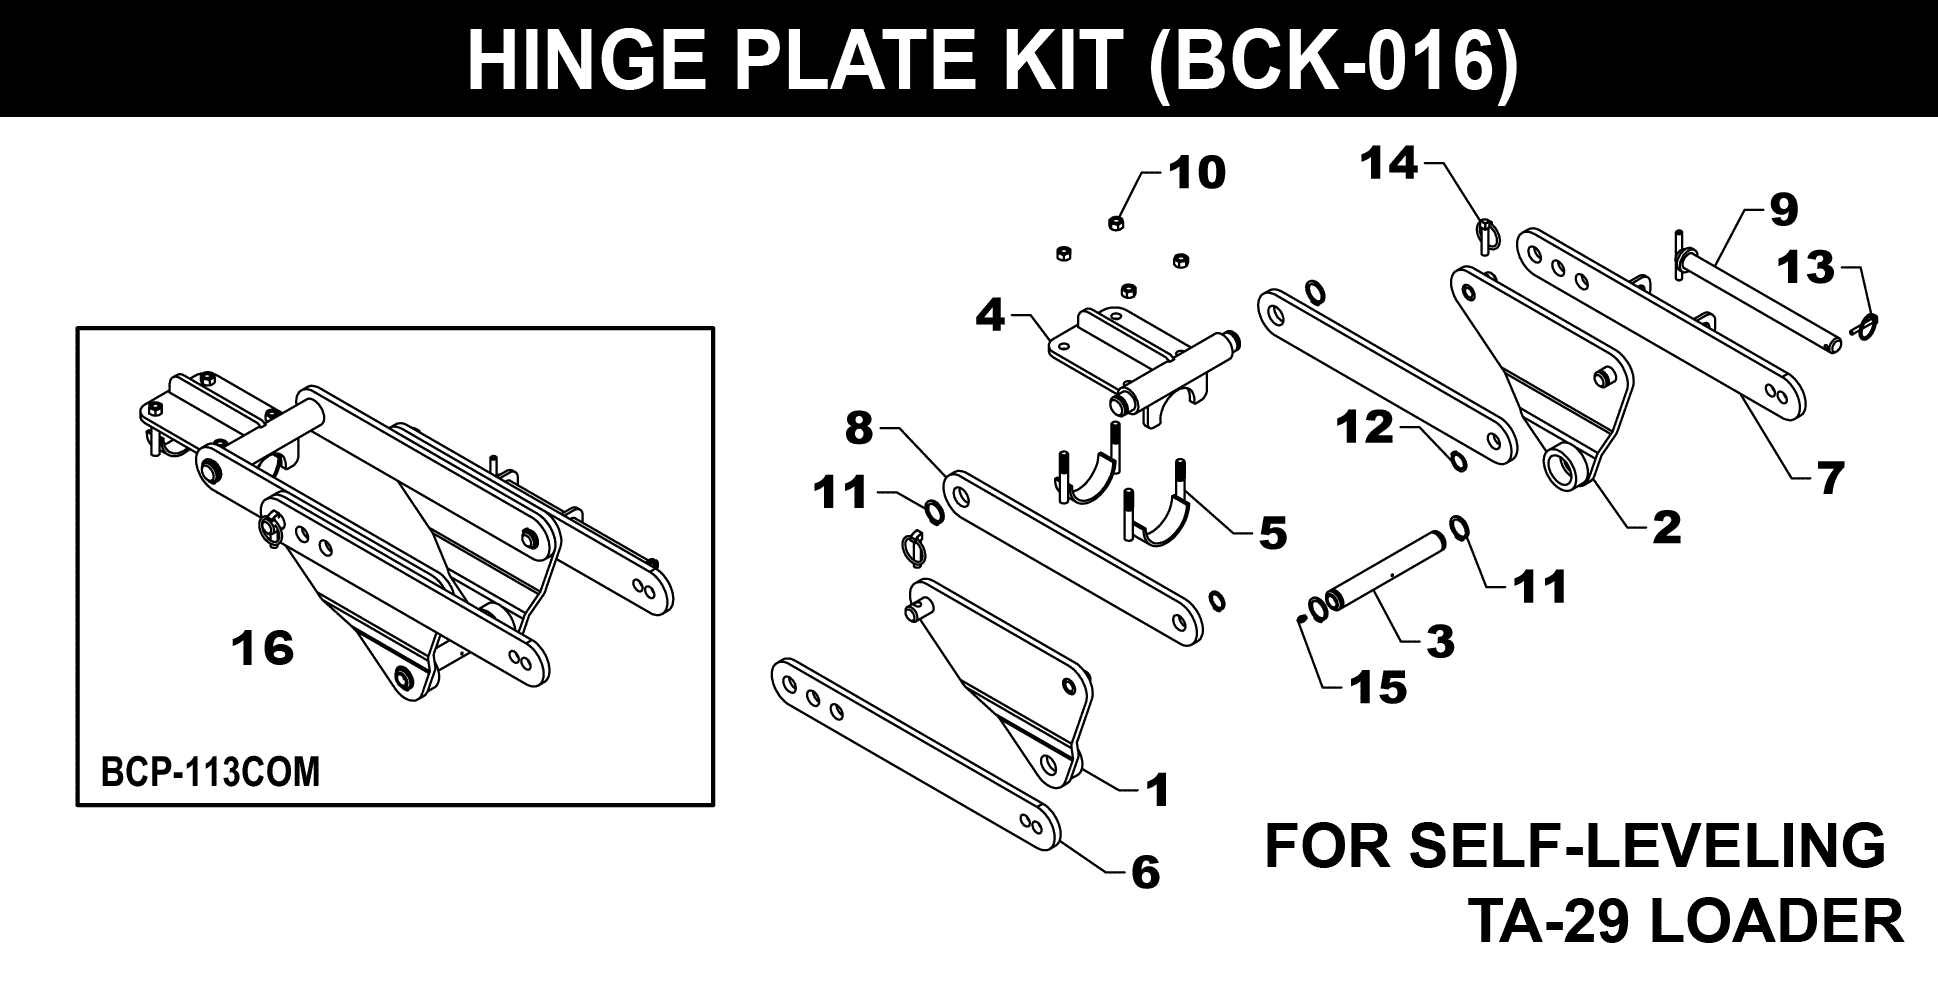 BCK-016 Hinge Plate Kit